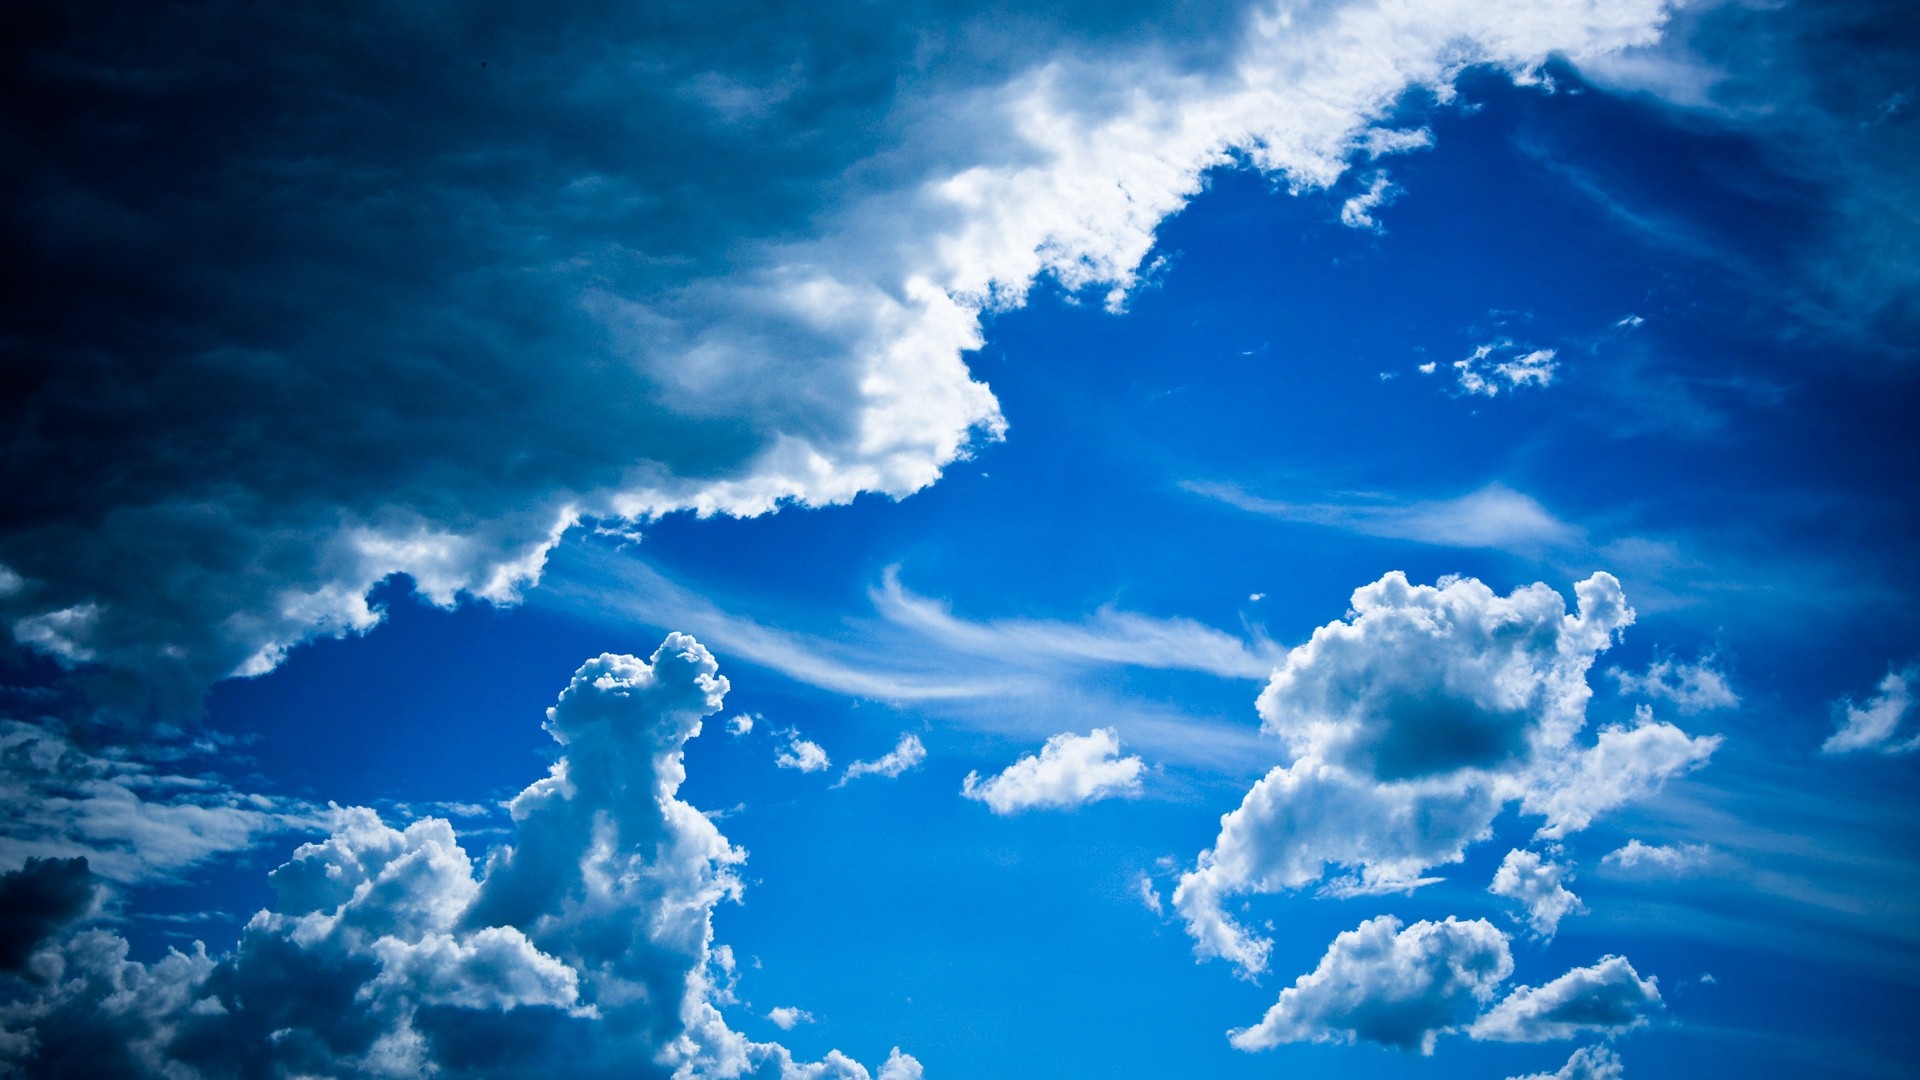 1920x1080 wallpapers: clouds, sky, blue, lightness, air masses, patterns, fine photo (image)